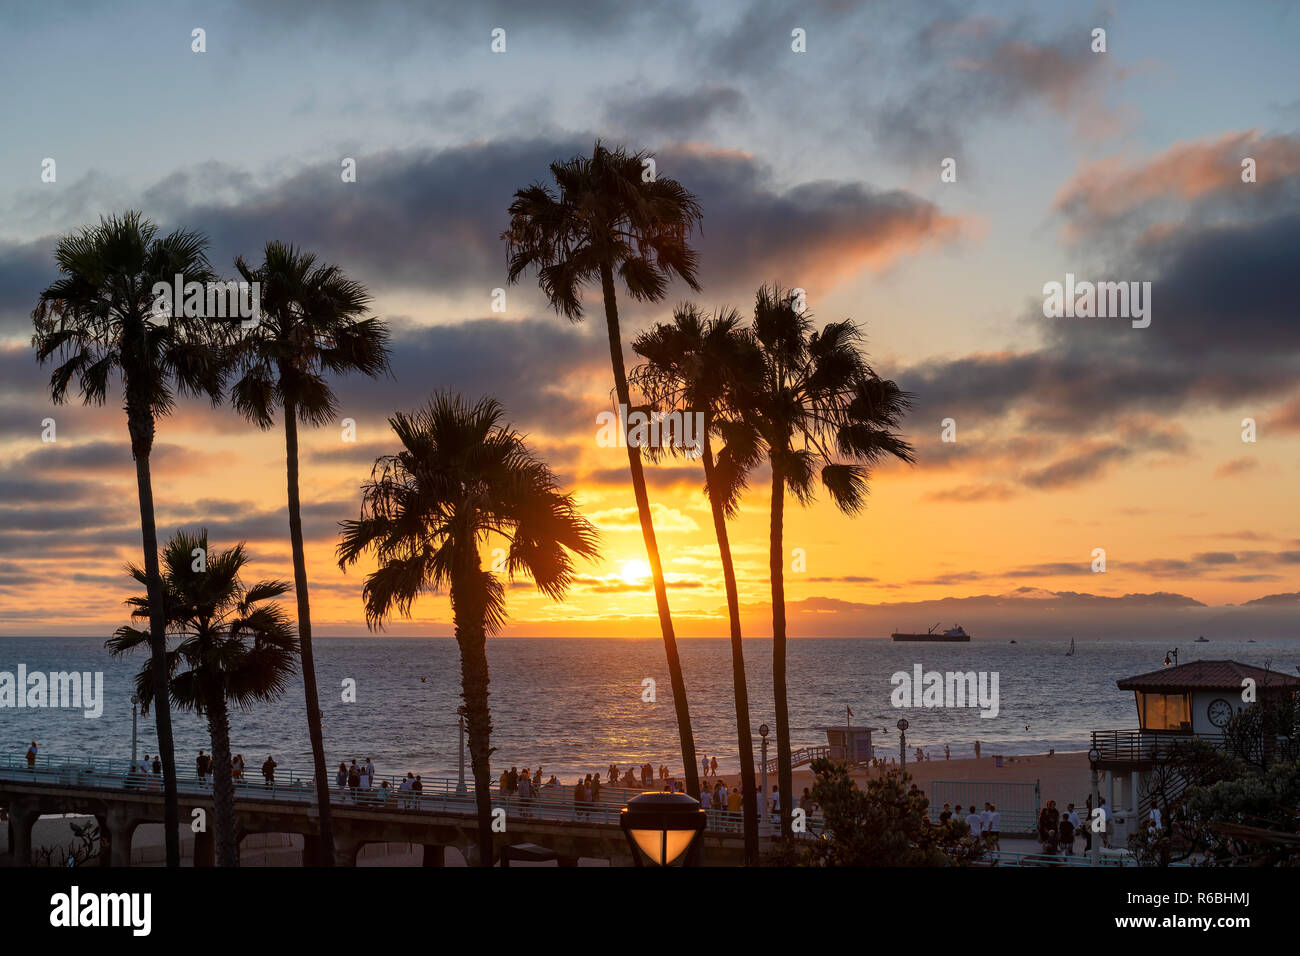 Los Angeles beach at sunset Stock Photo